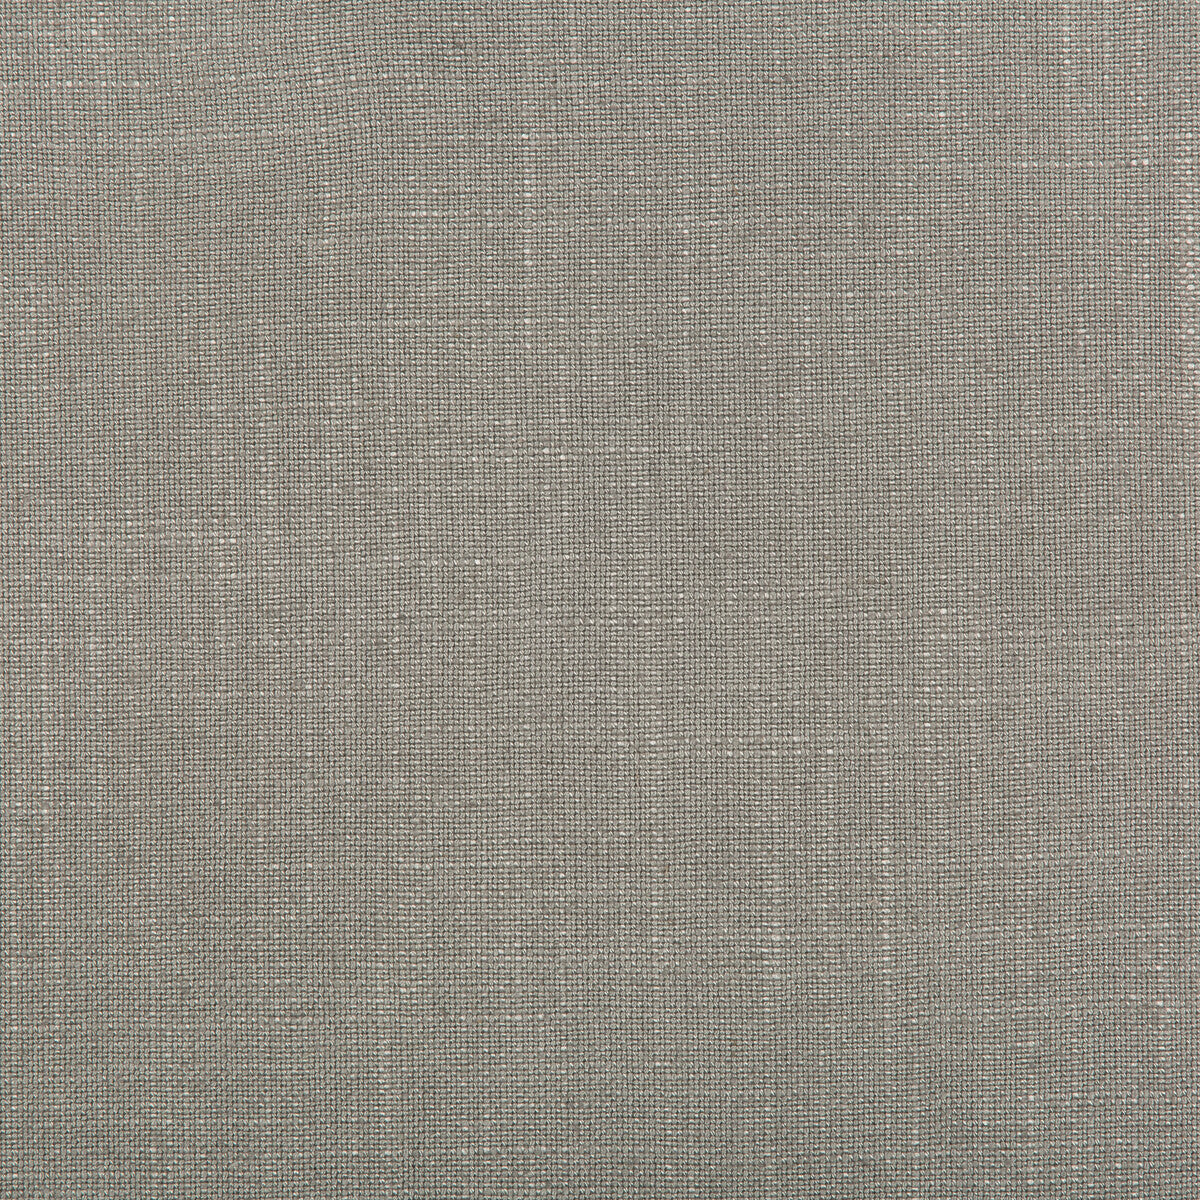 Aura fabric in storm color - pattern 35520.1121.0 - by Kravet Design